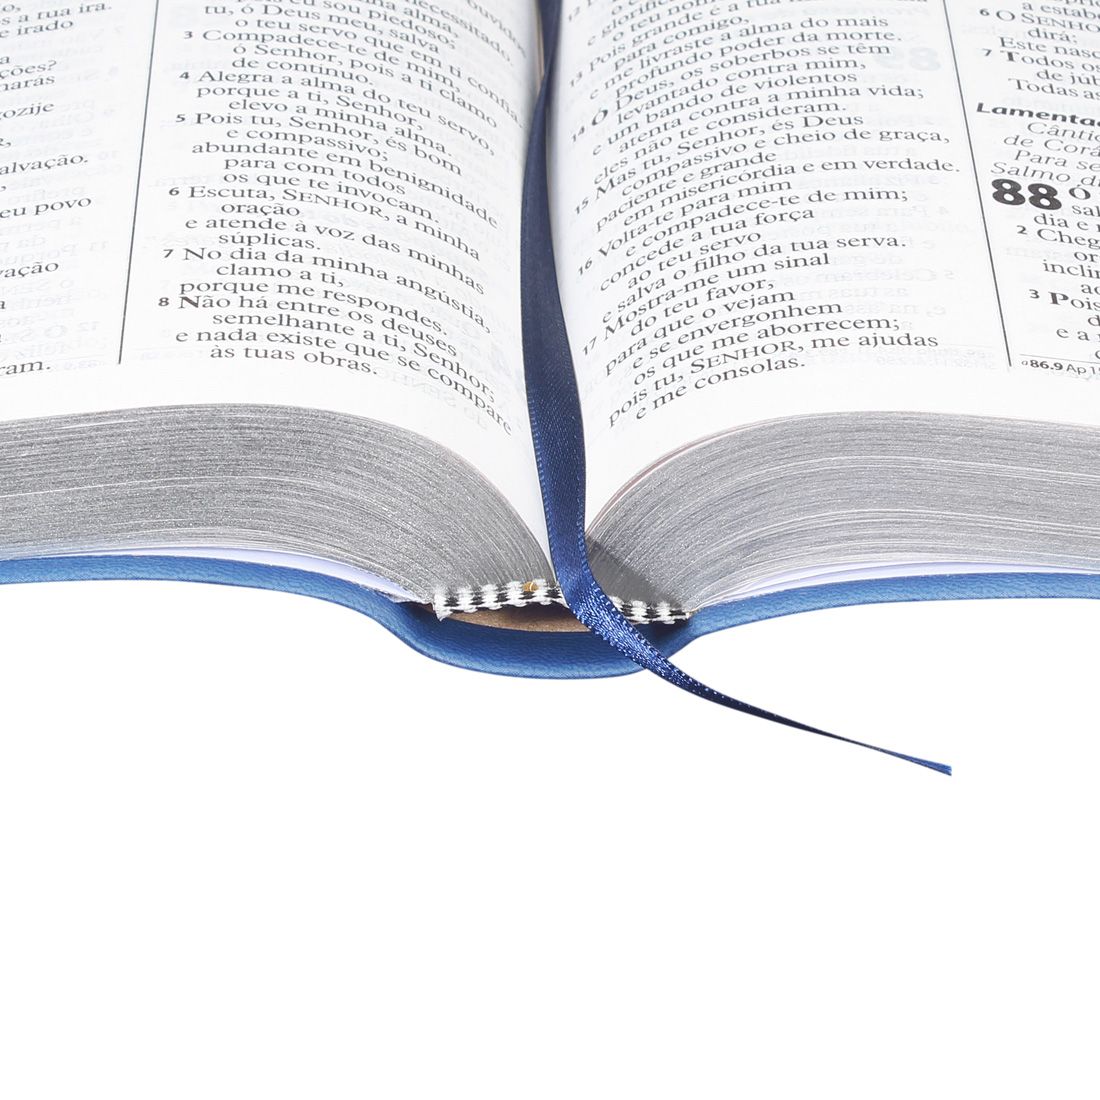 Kit Bíblia Sagrada Letra Gigante Capa Couro Azul/Cinza + Manual Bíblico SBB 3ª Edição